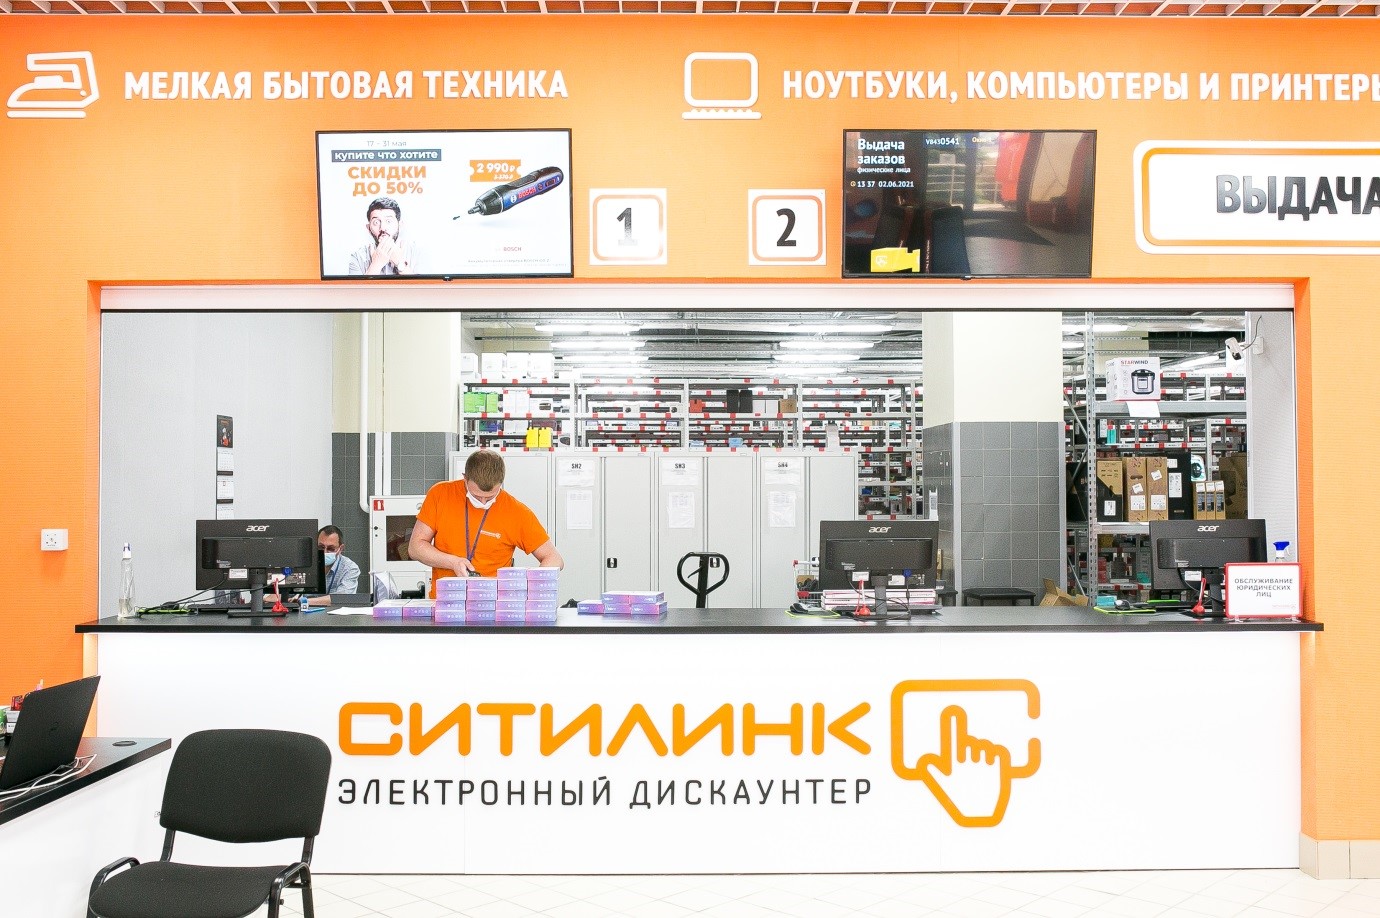 Ситилинк Интернет Магазин Нижний Новгород Каталог